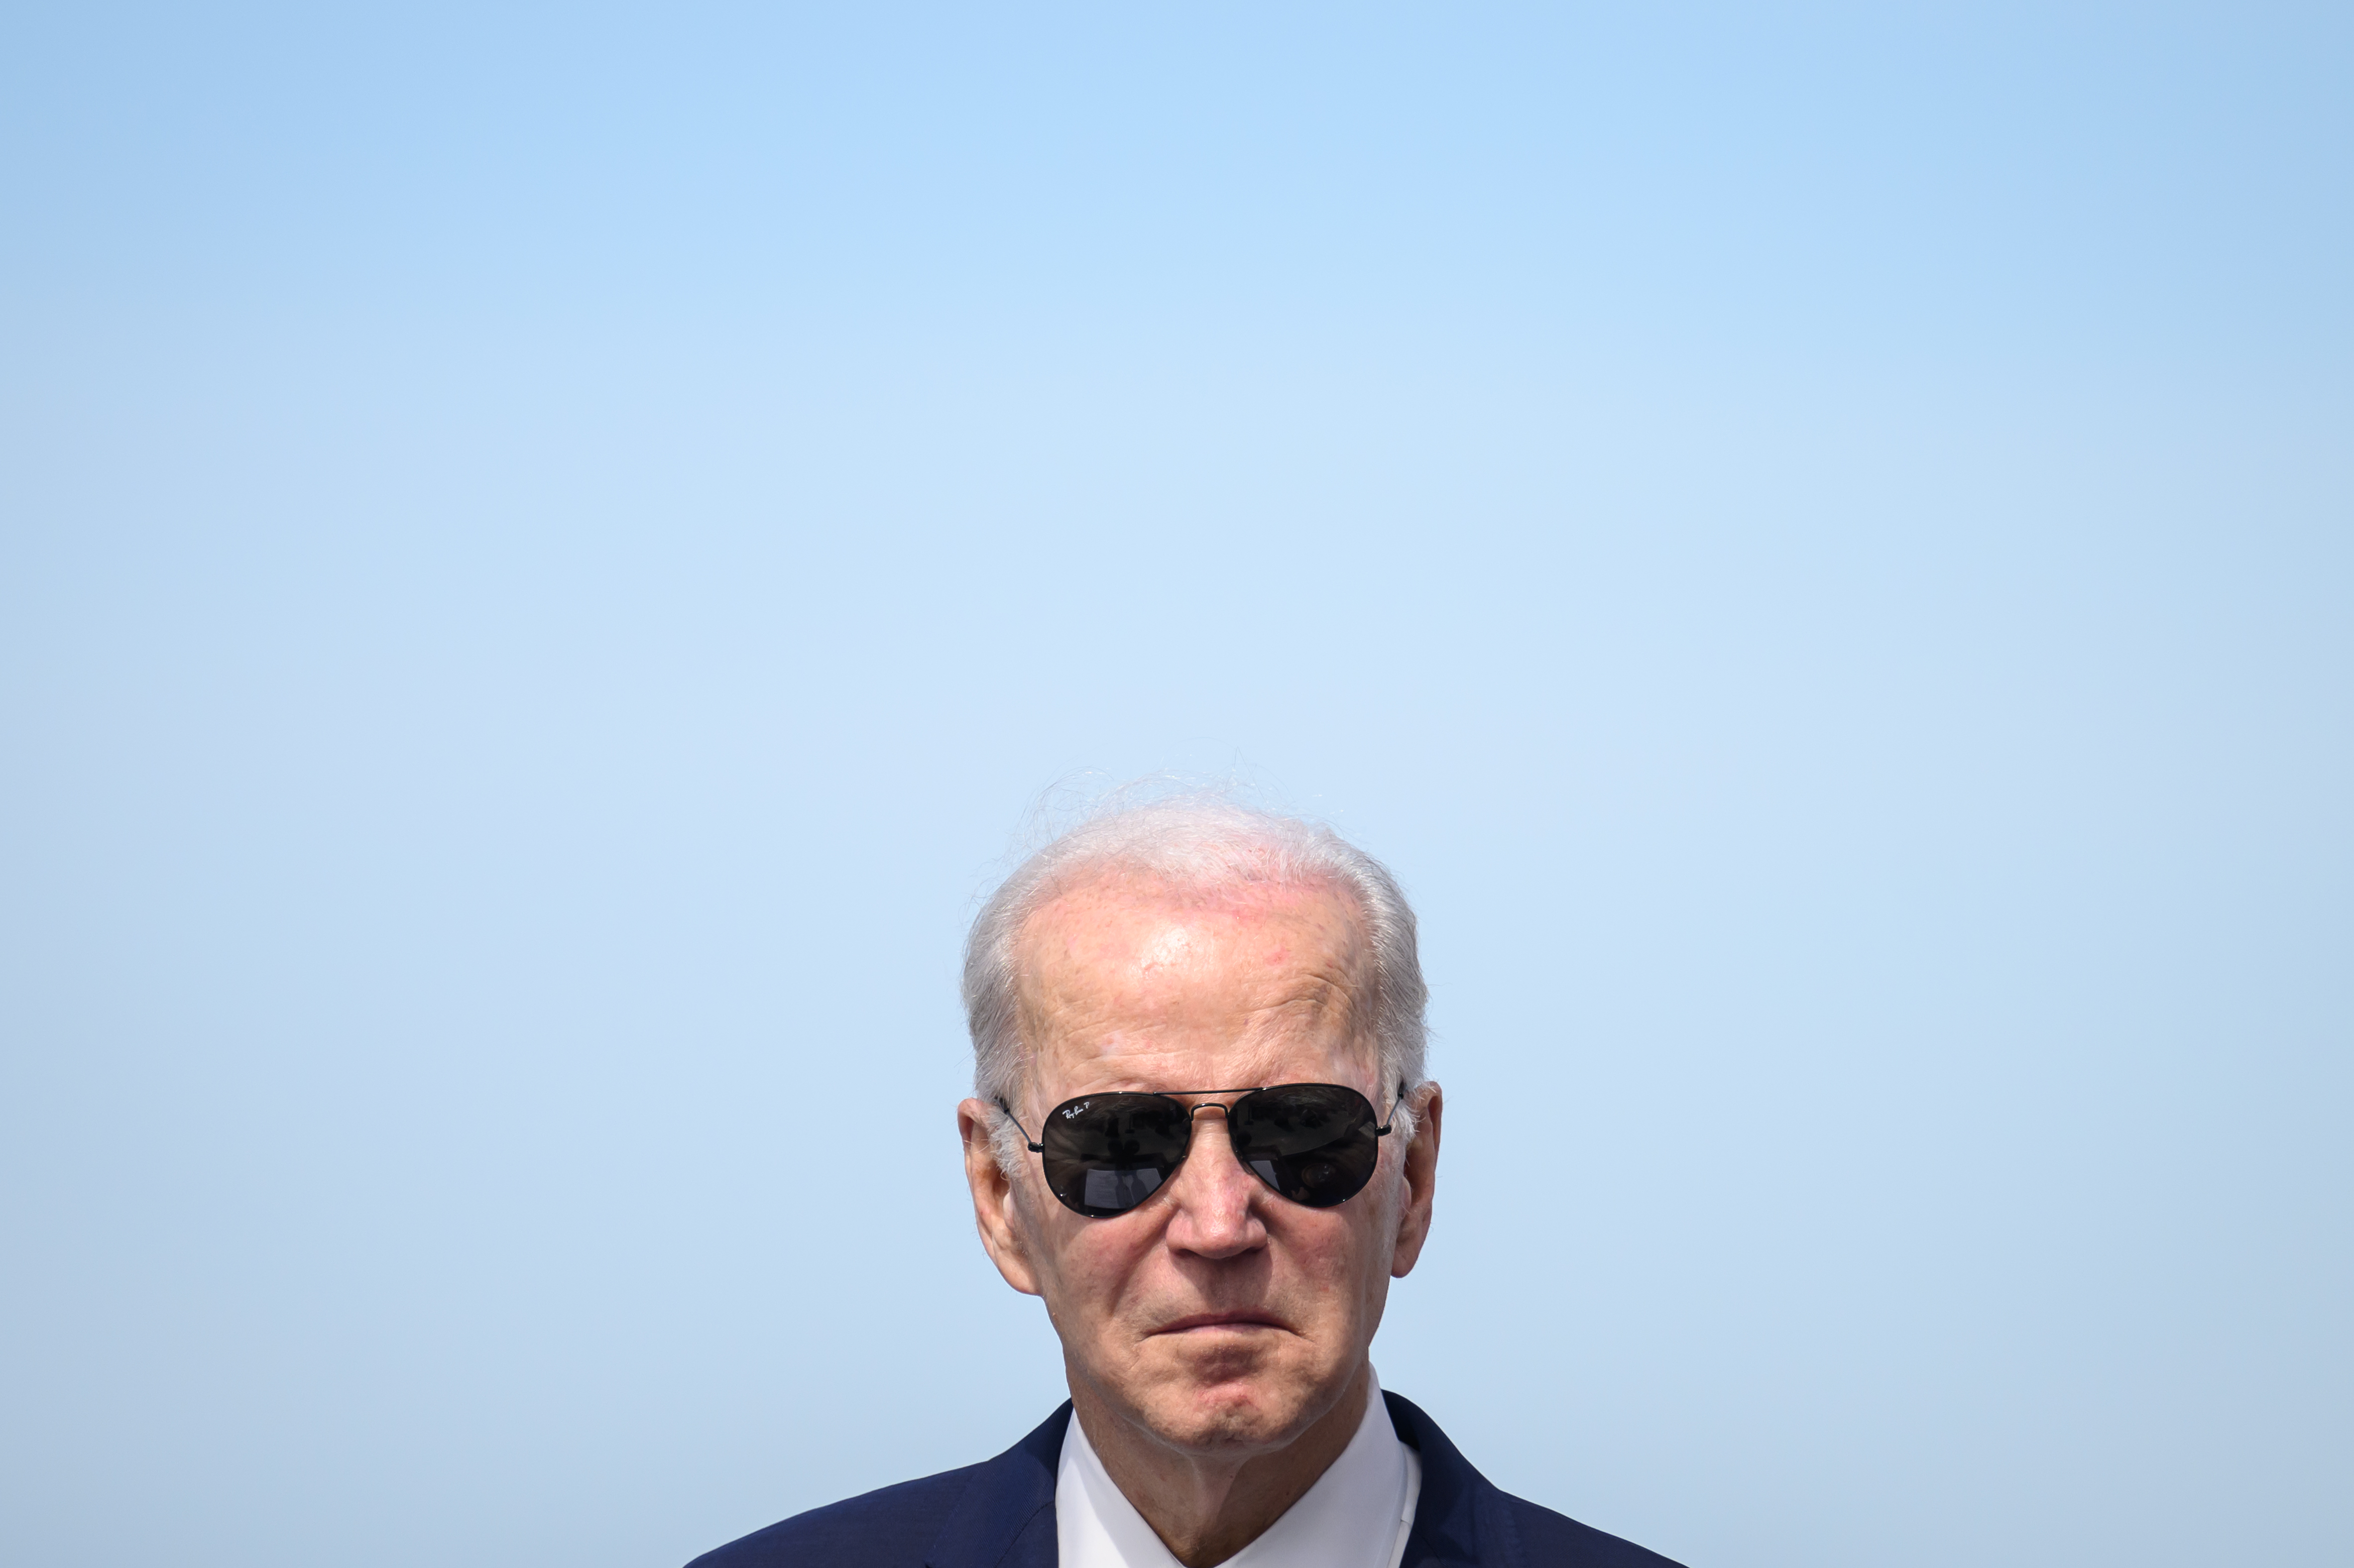 A photo of President Joe Biden wearing sunglasses, against a blue sky.